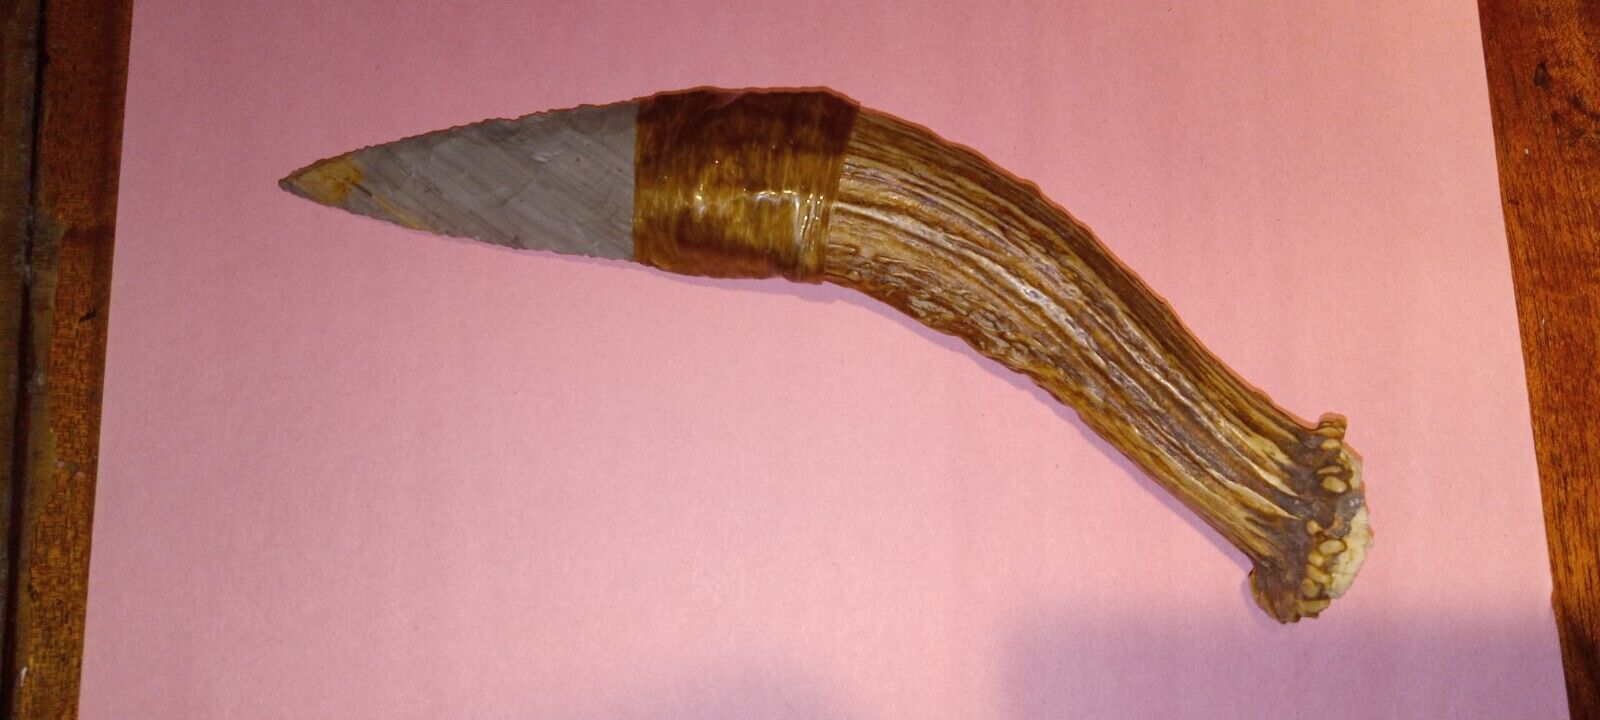 Primative style knife,knives,fixed blade,arrowheads,deer antler handle;LK;art